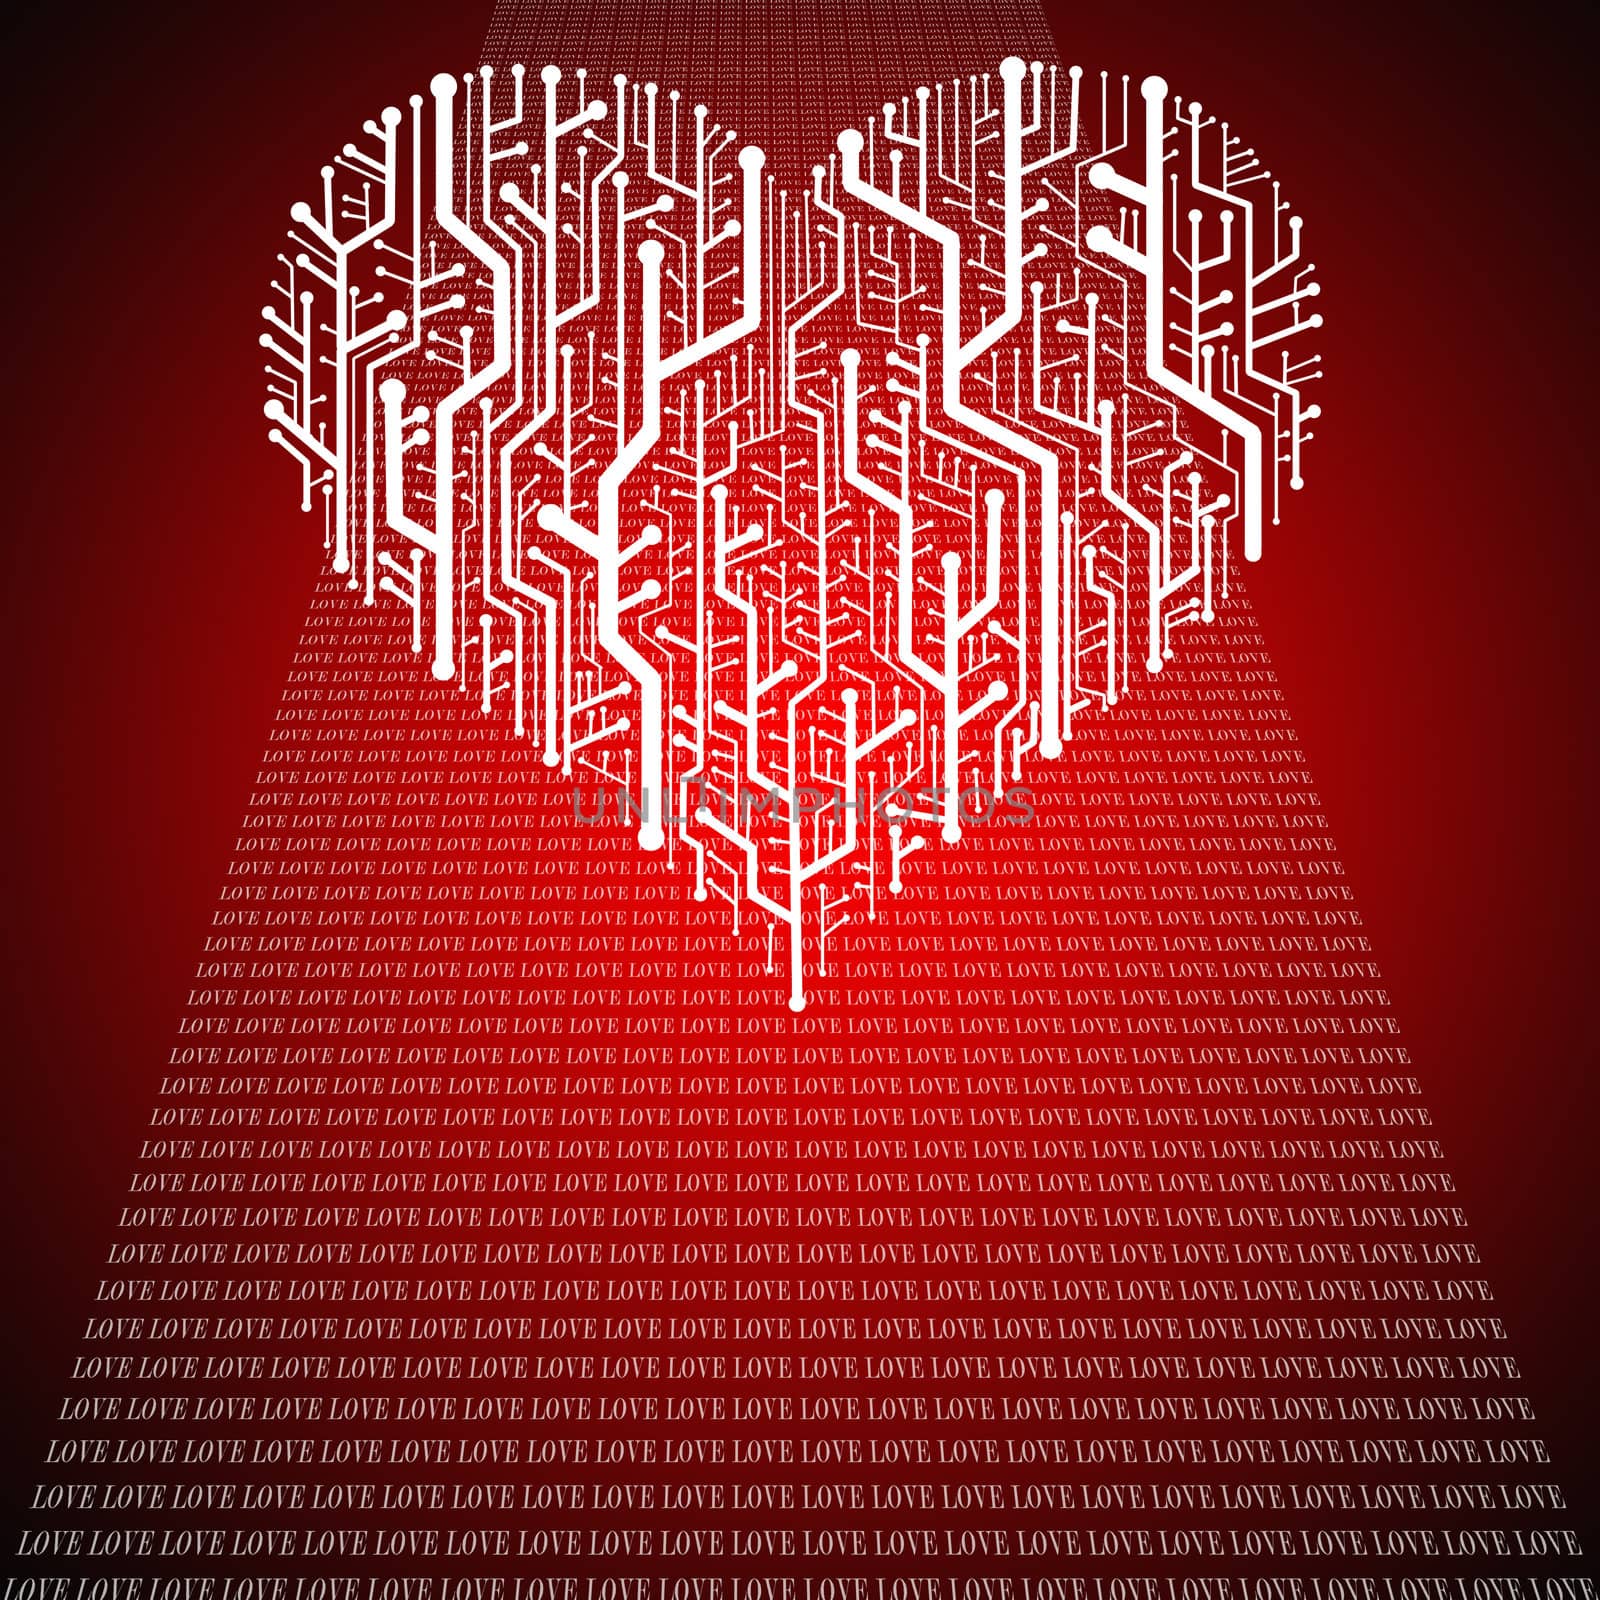 Circuit board in Heart shape, Technology background 